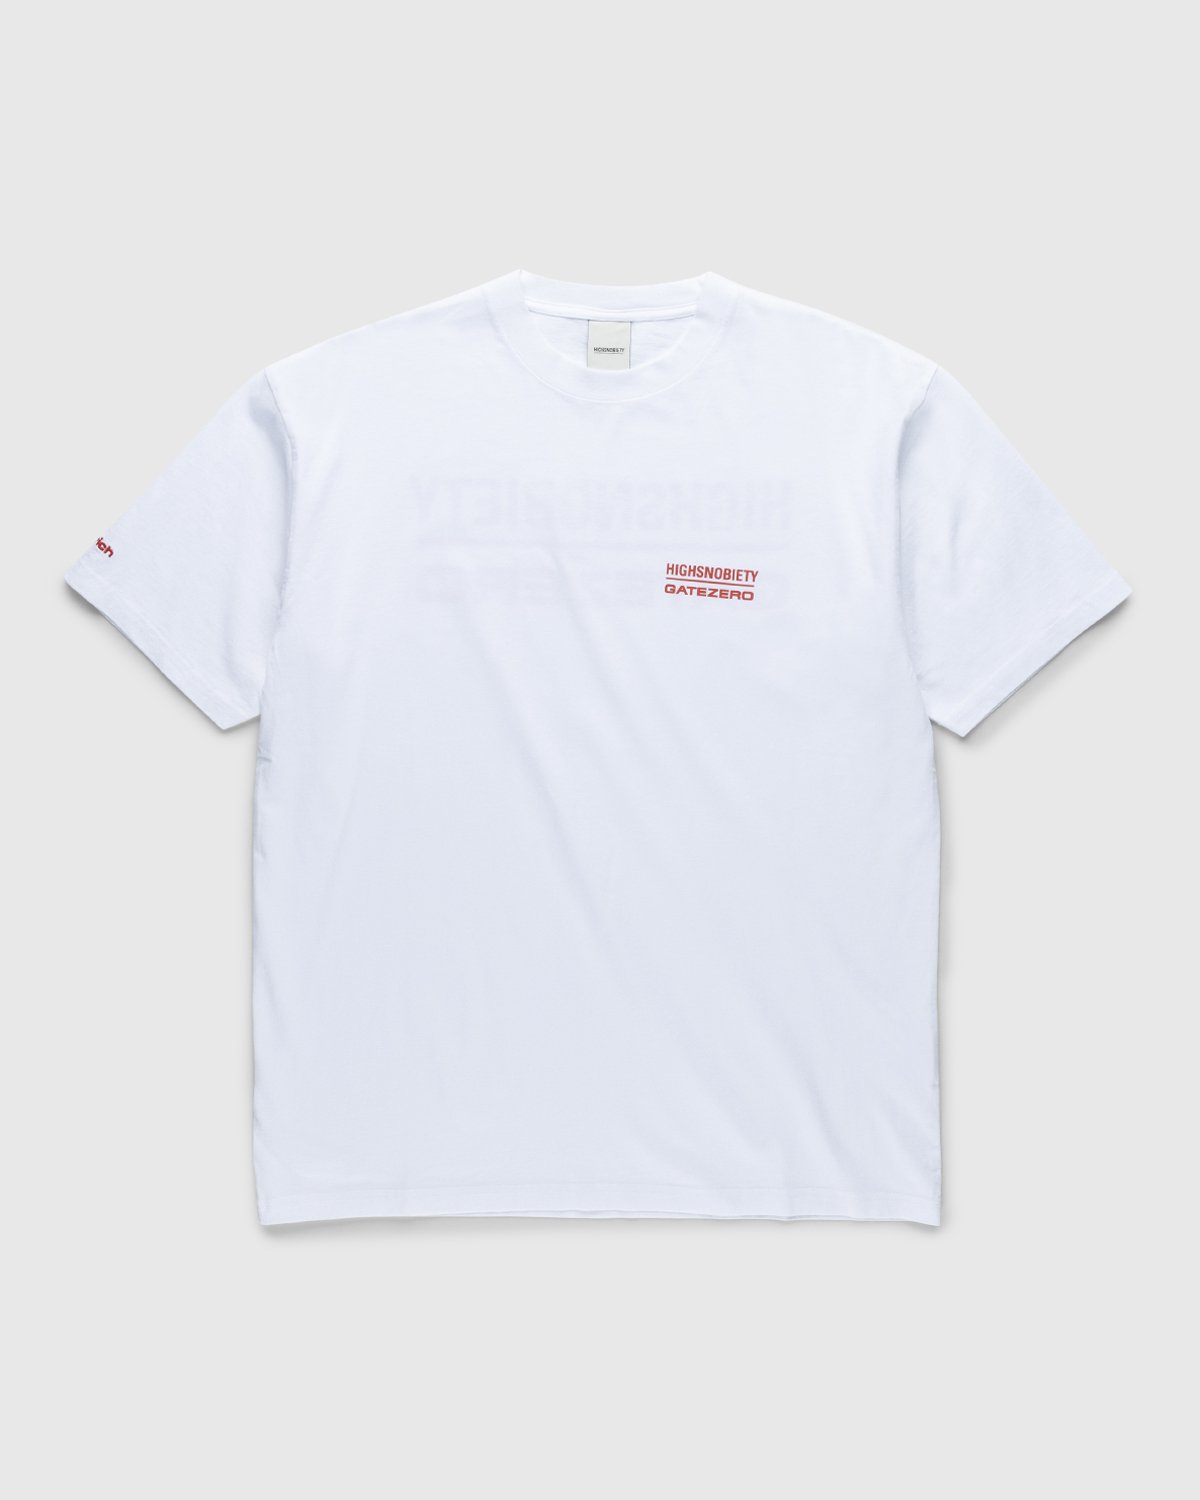 Highsnobiety - GATEZERO Logo T-Shirt White - Clothing - White - Image 2